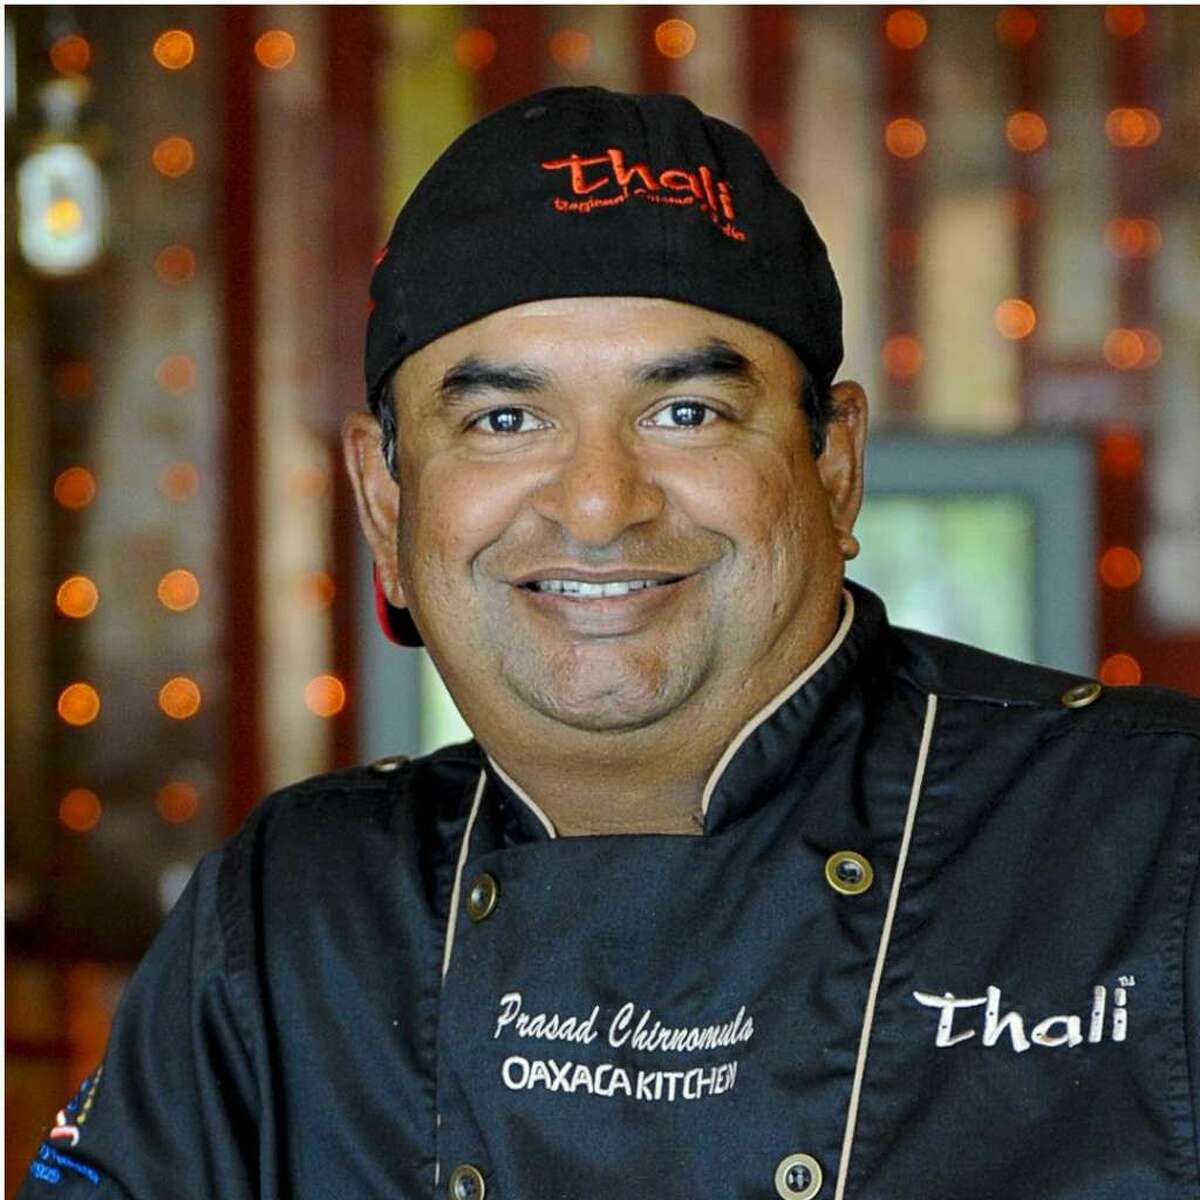 Chef and restaurant owner Prasad Chirnomula